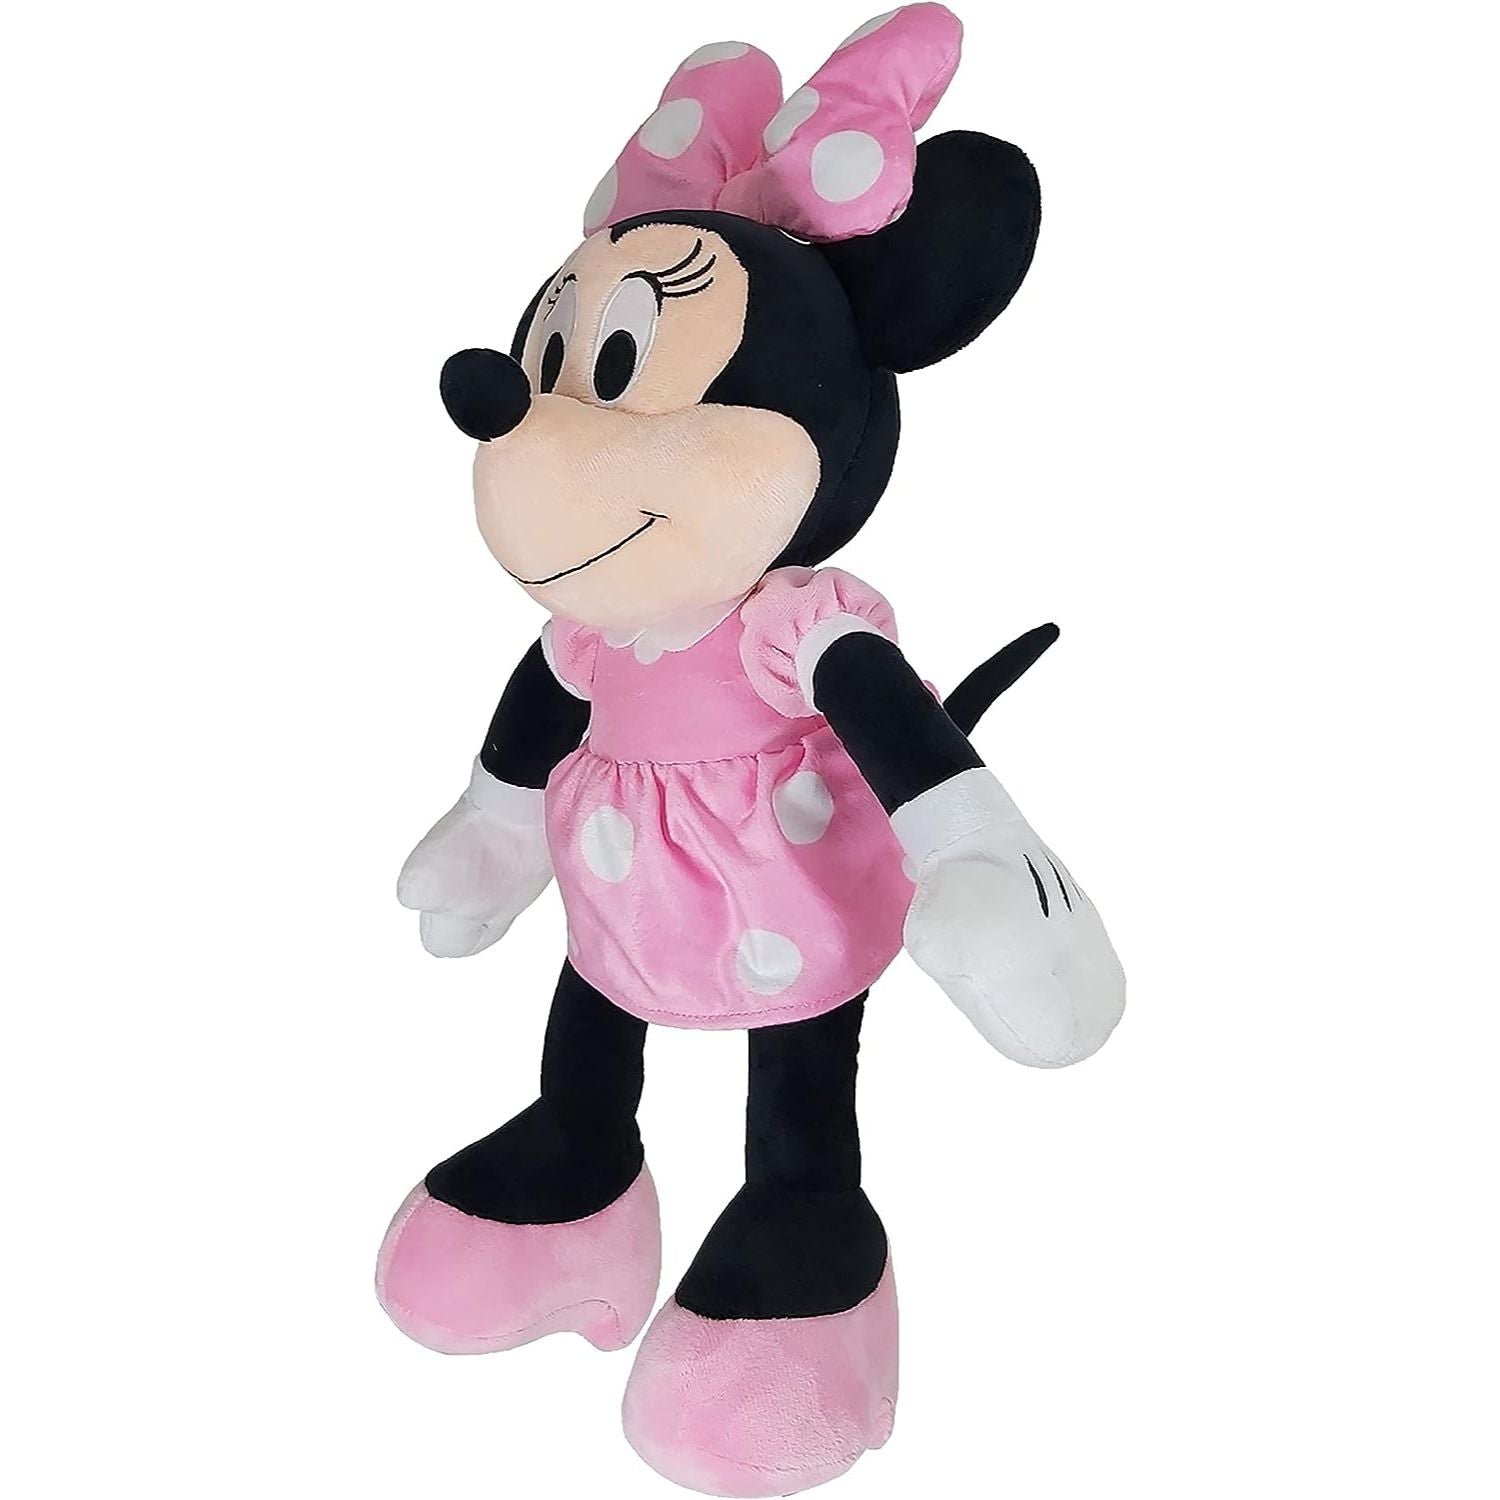 Disney Minnie mouse plush - Heretoserveyou